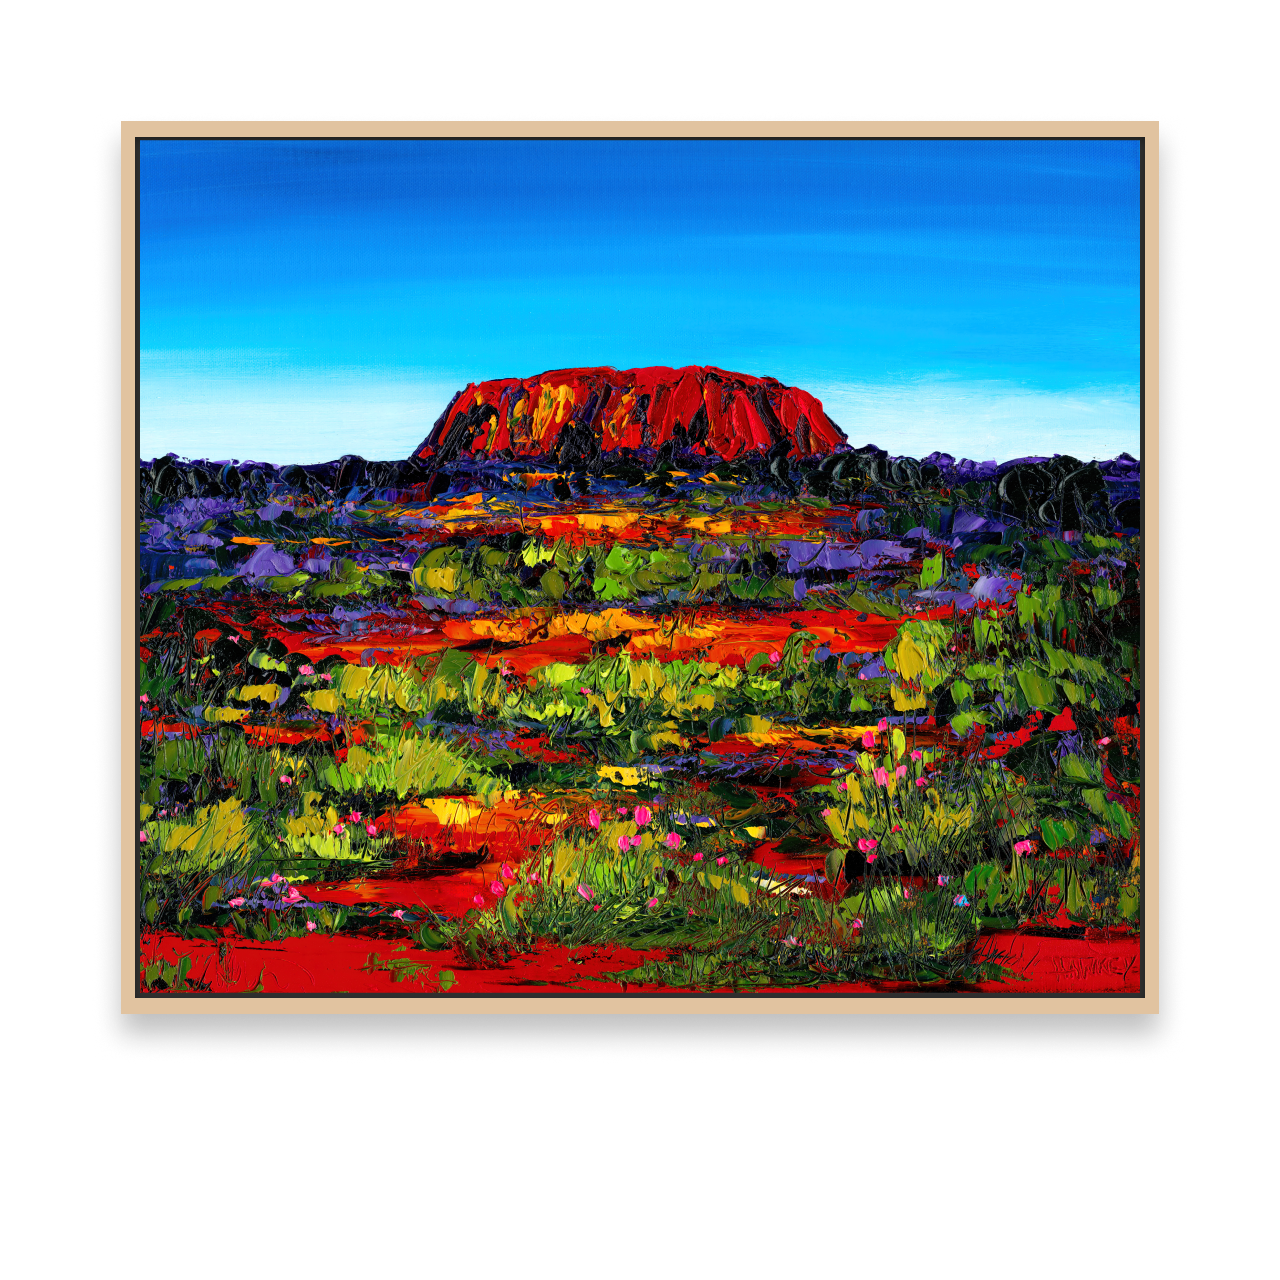 Main image of Uluru